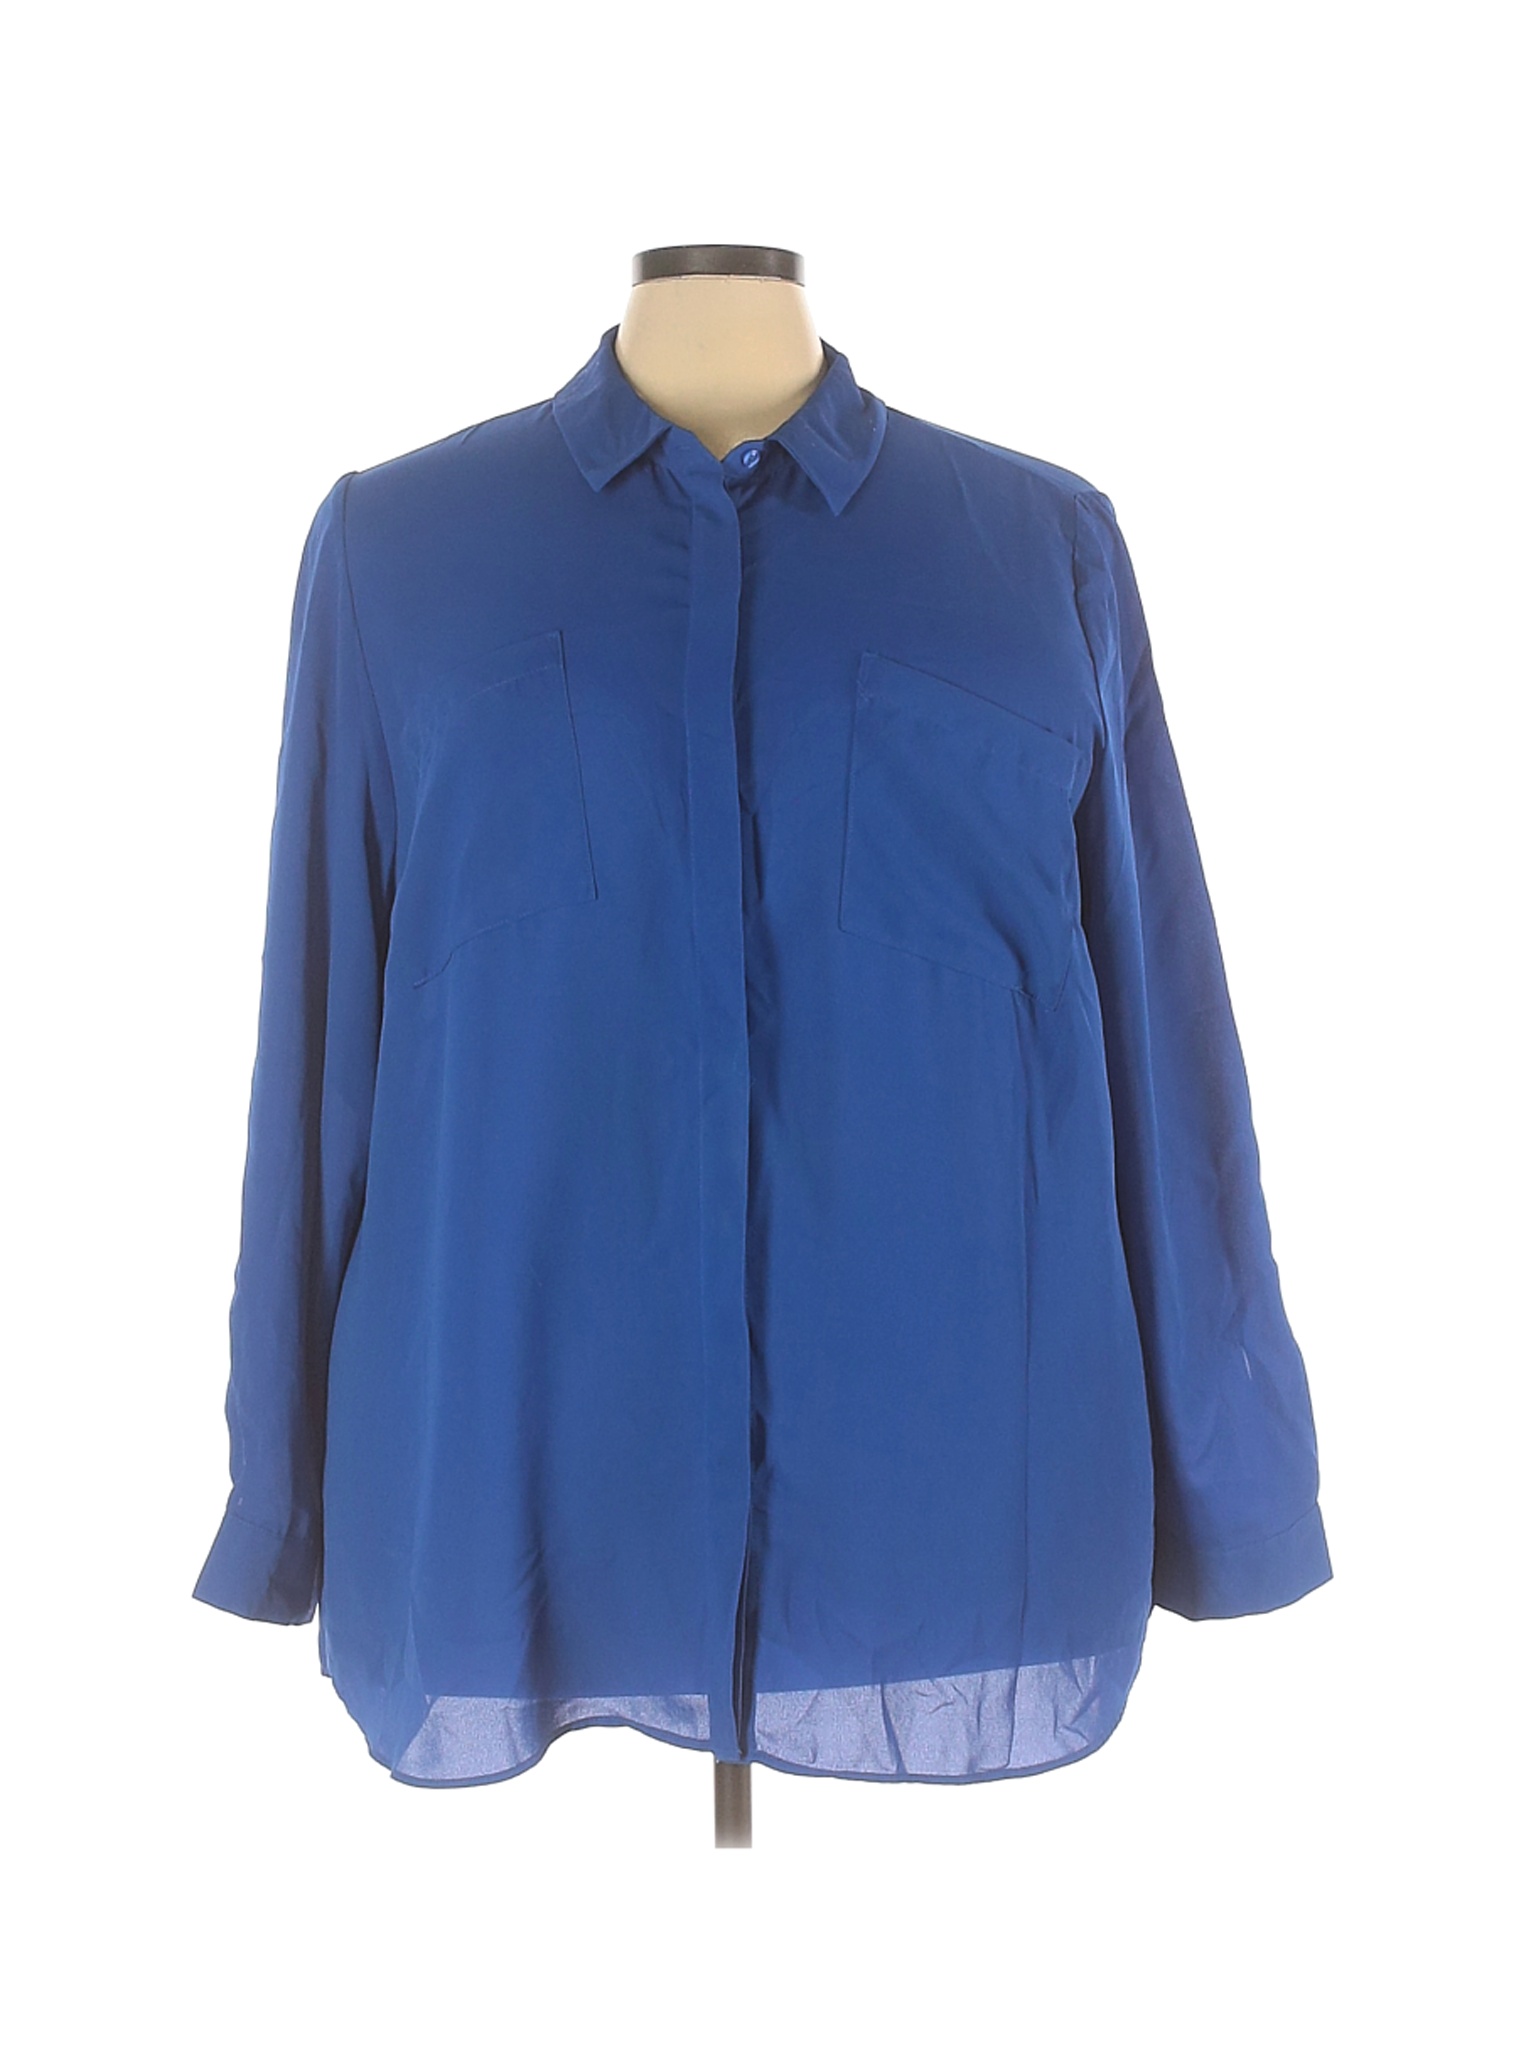 Lane Bryant Women Blue Long Sleeve Blouse 28 Plus | eBay